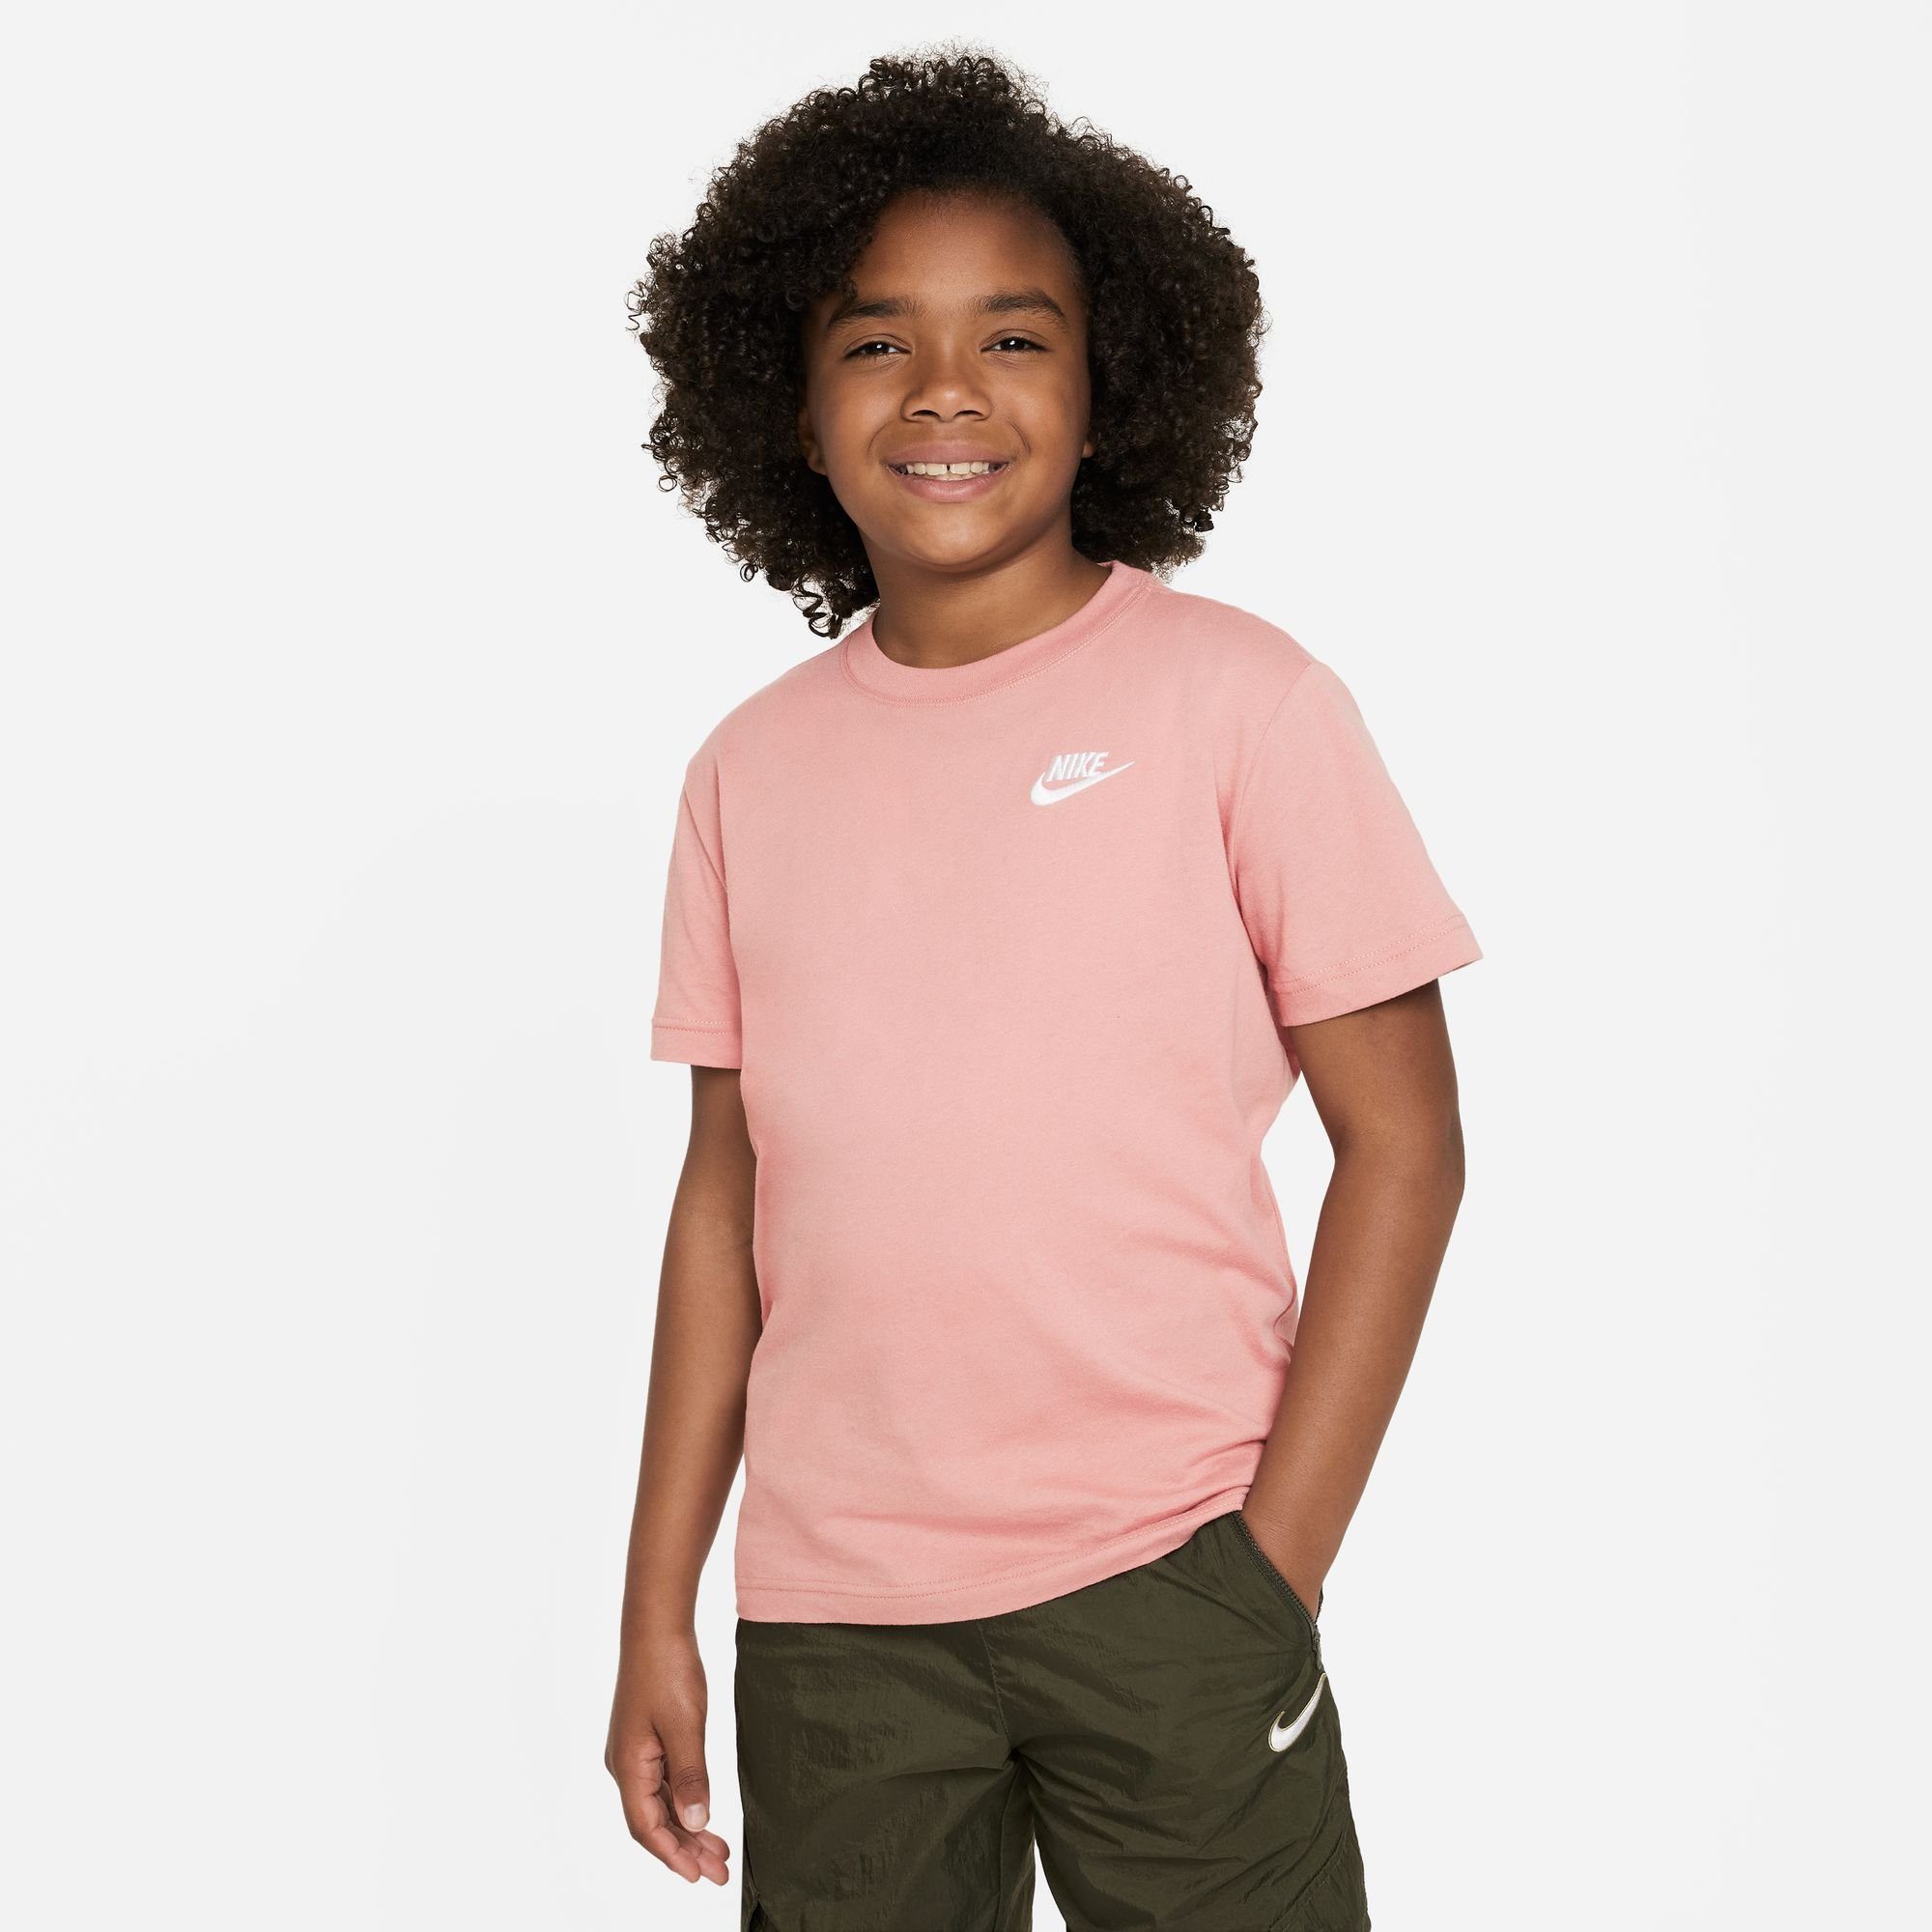 RED BIG KIDS' (GIRLS) Nike T-Shirt STARDUST Sportswear T-SHIRT